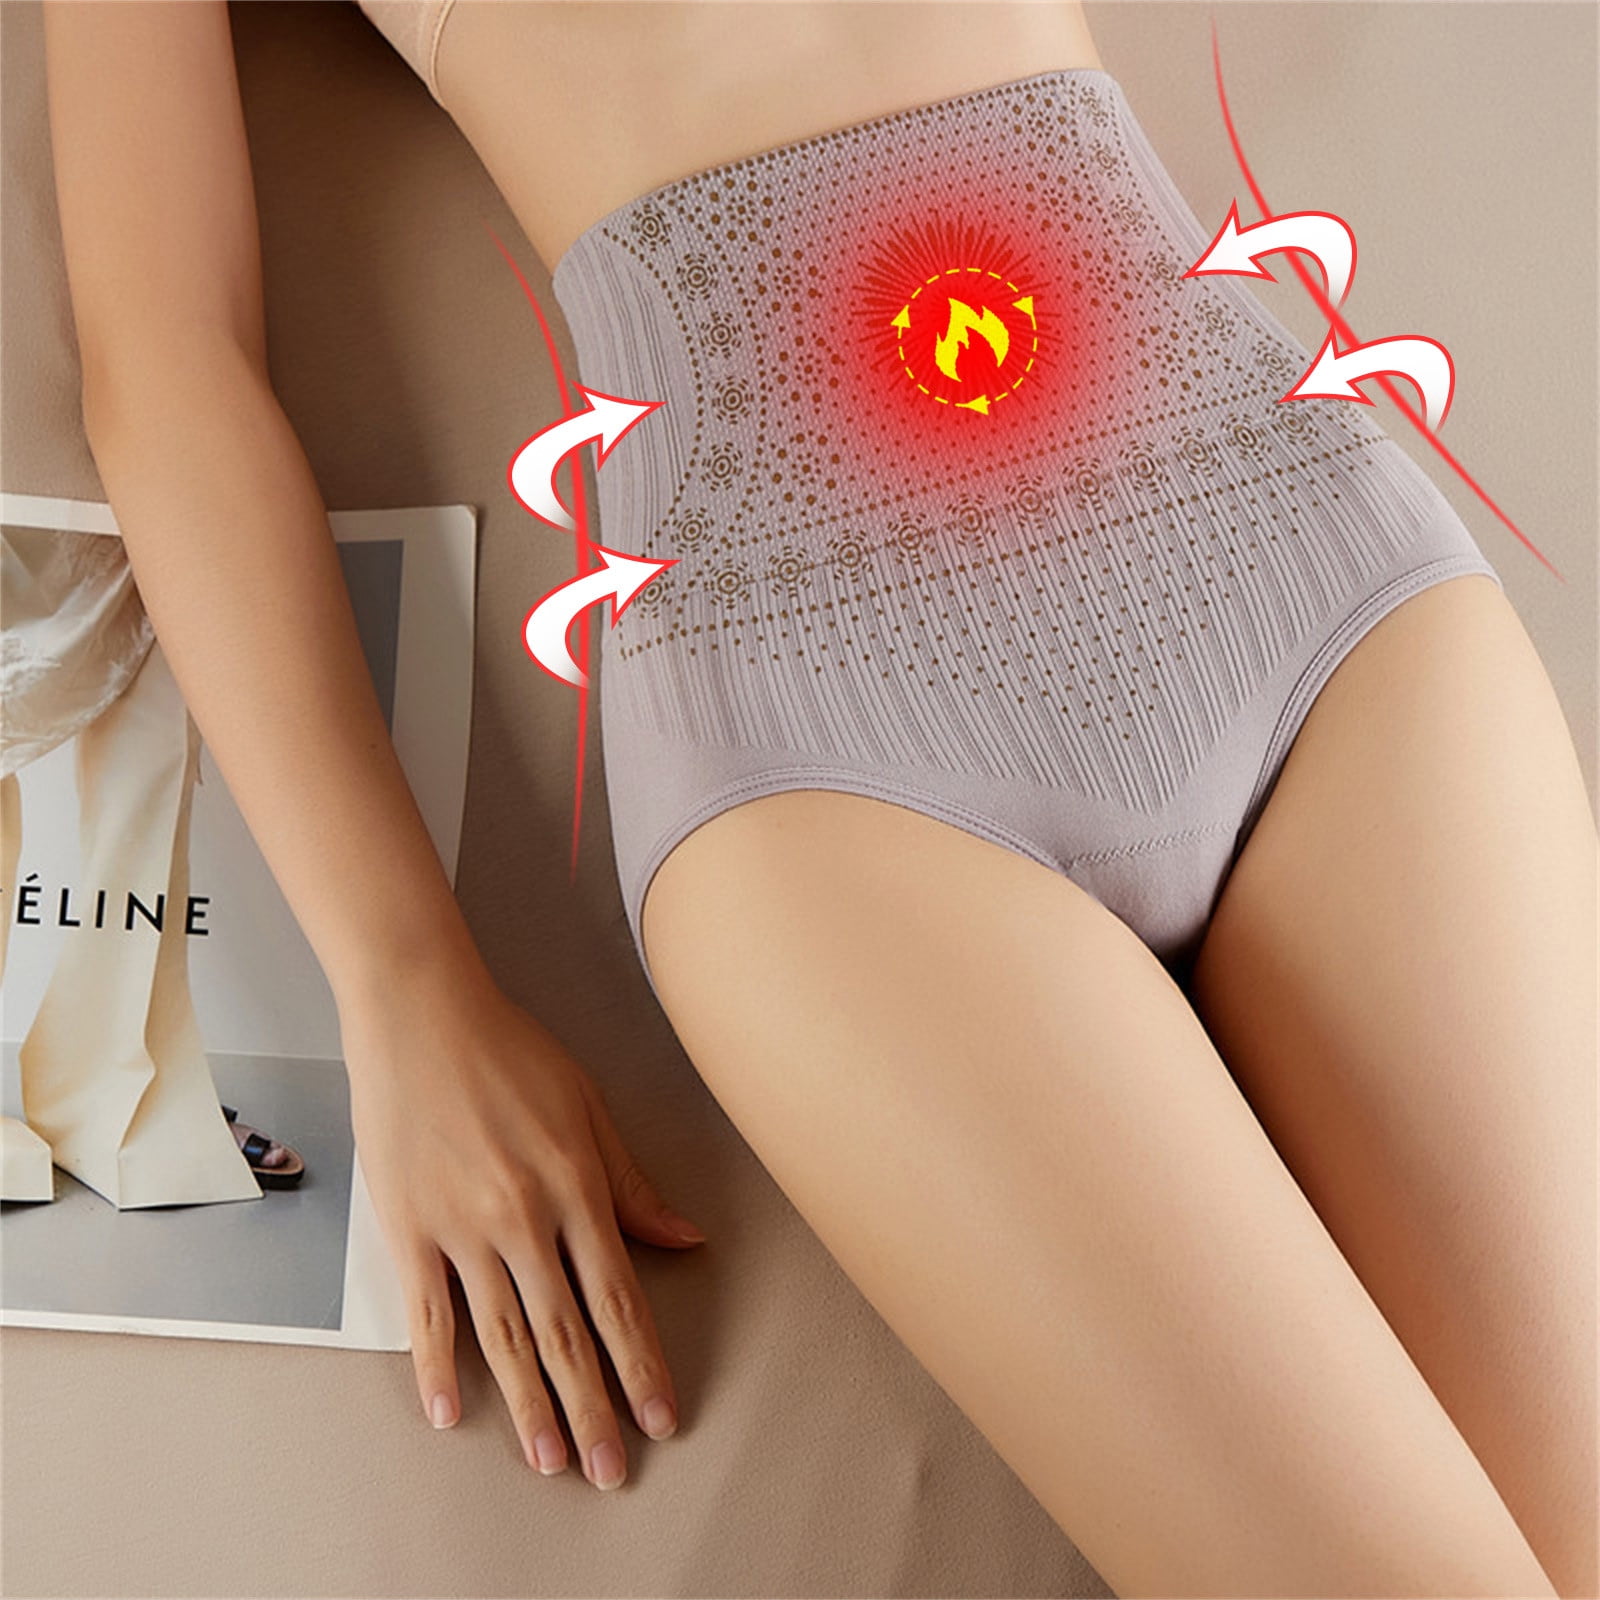 XIAOFFENN Period Underwear For Women, Far Infrared Negative Oxygen Ion Fat  Burning Tummy Control & Detox Bodysuit, Graphene Honeycomb Body Shaping